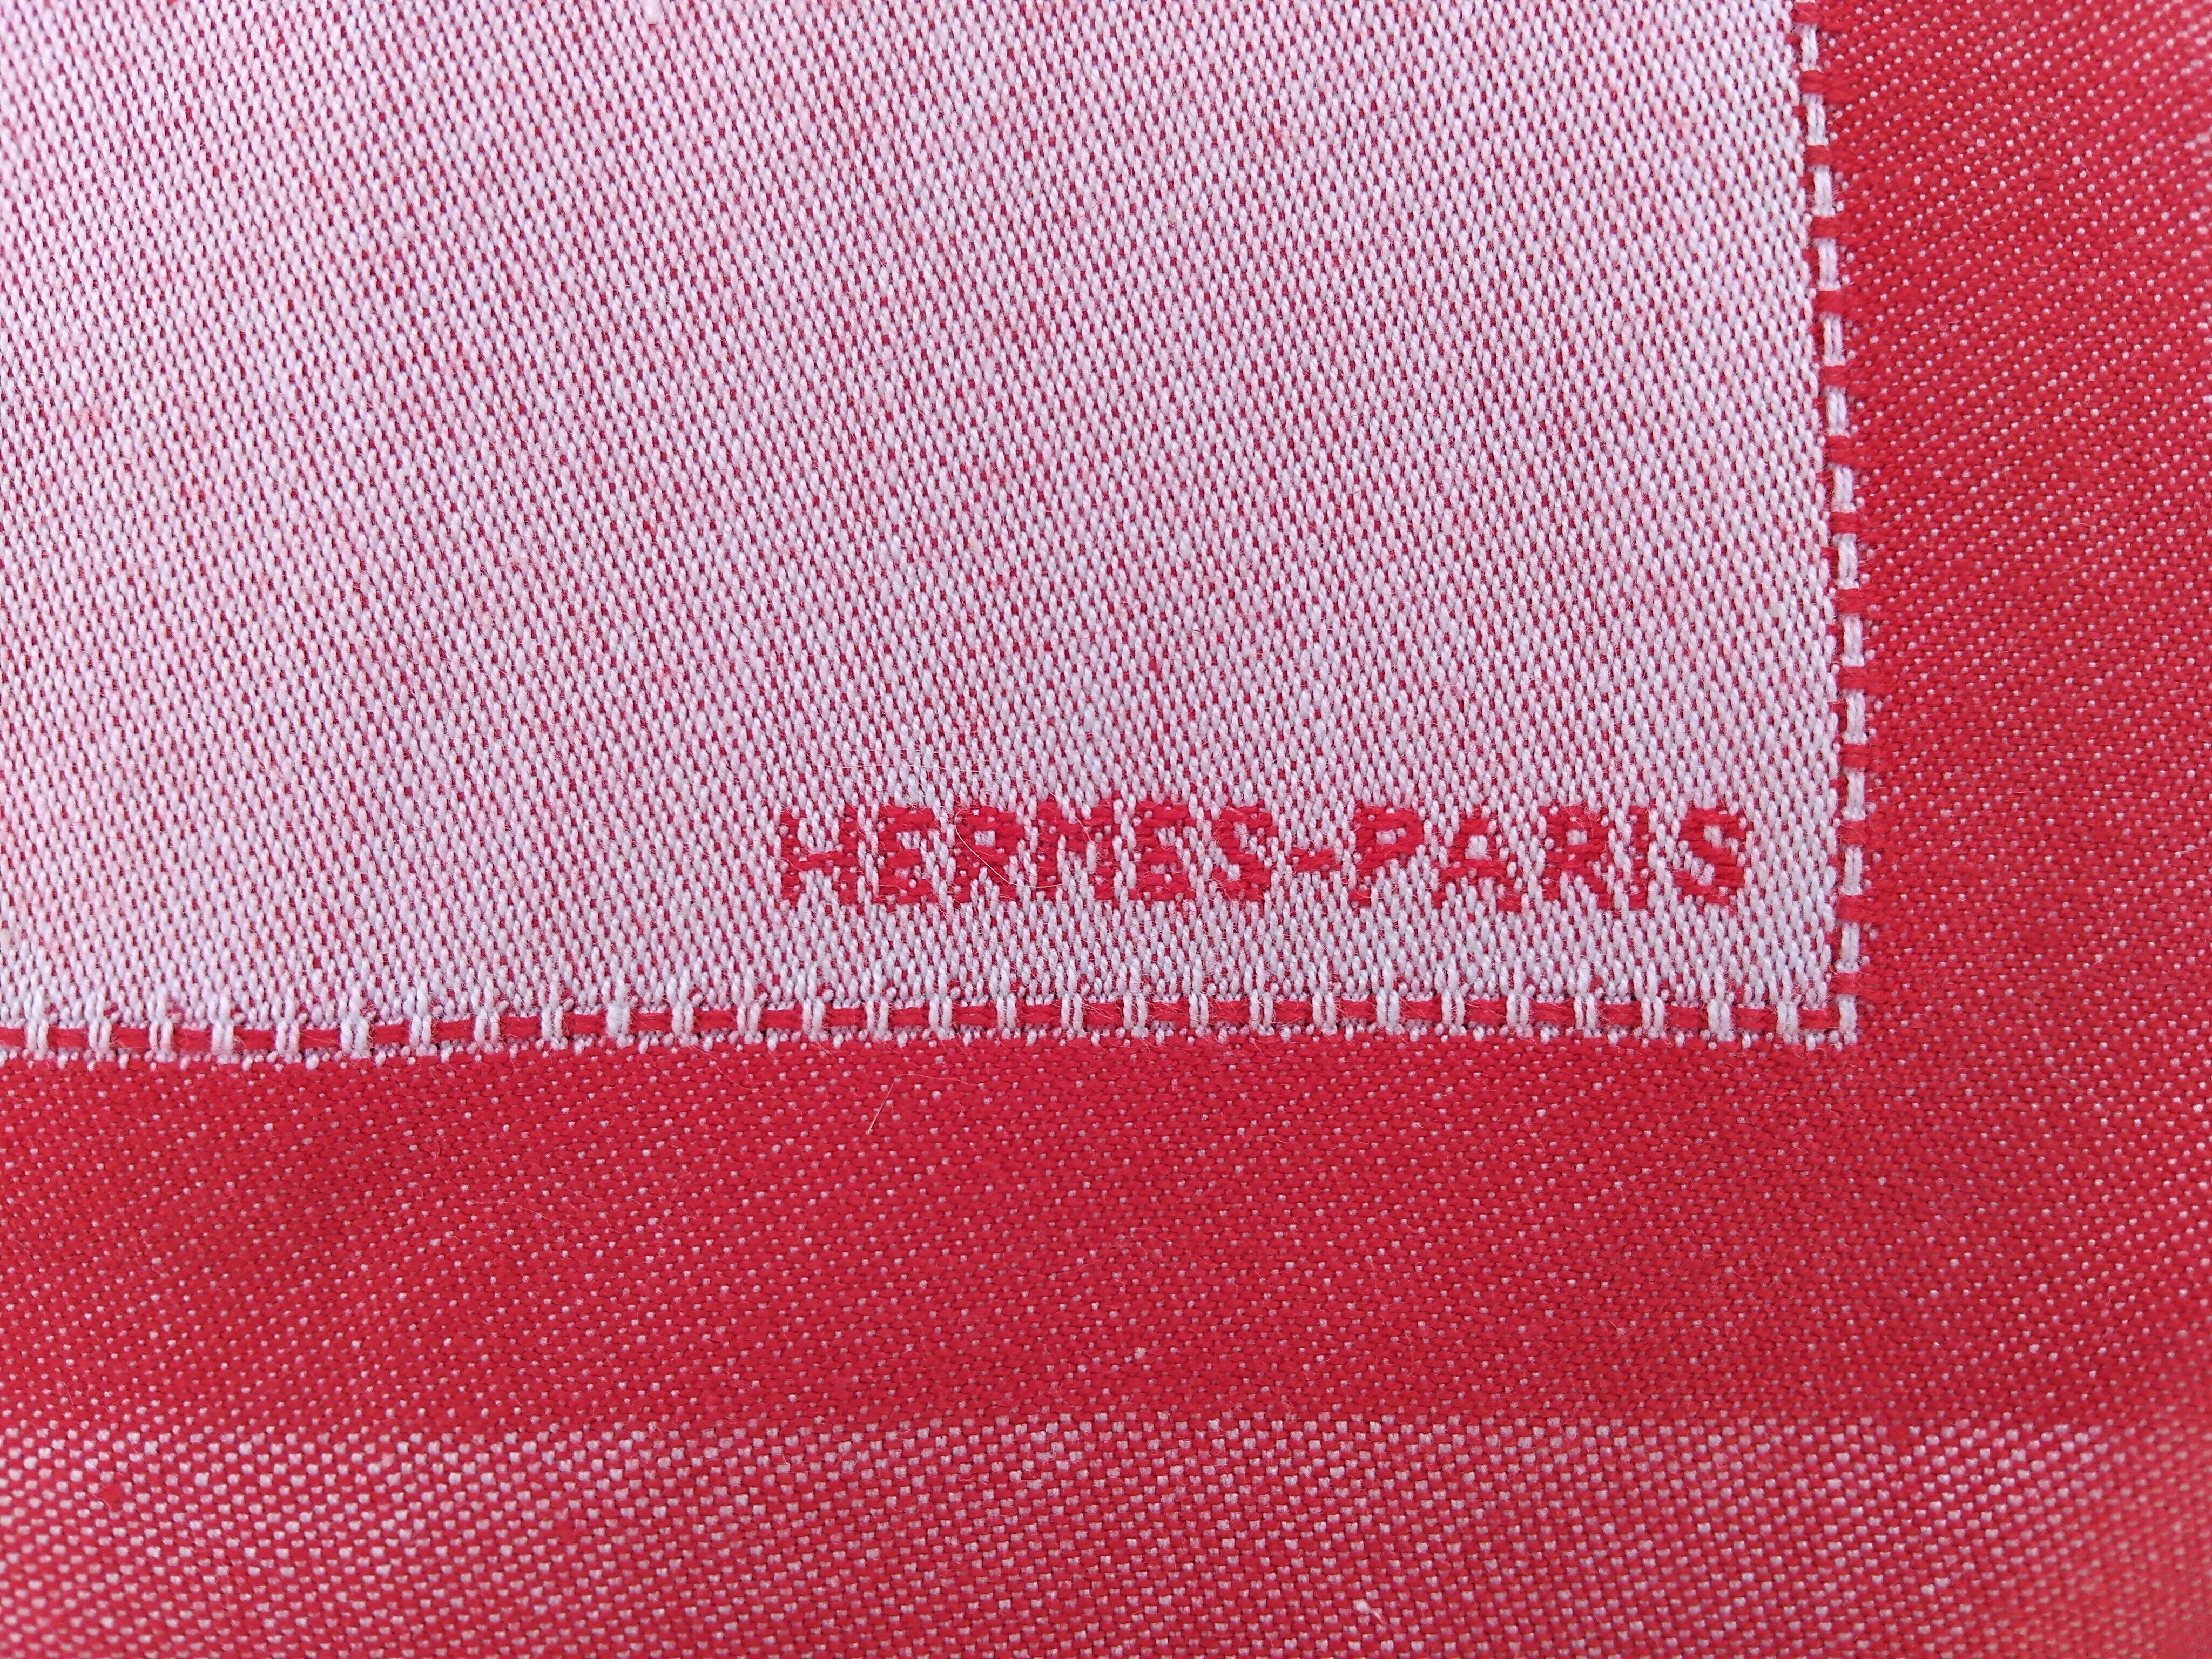 Exceptional Hermès Napkin For Formula One Paddock Club GP F1 Car Race For Sale 2